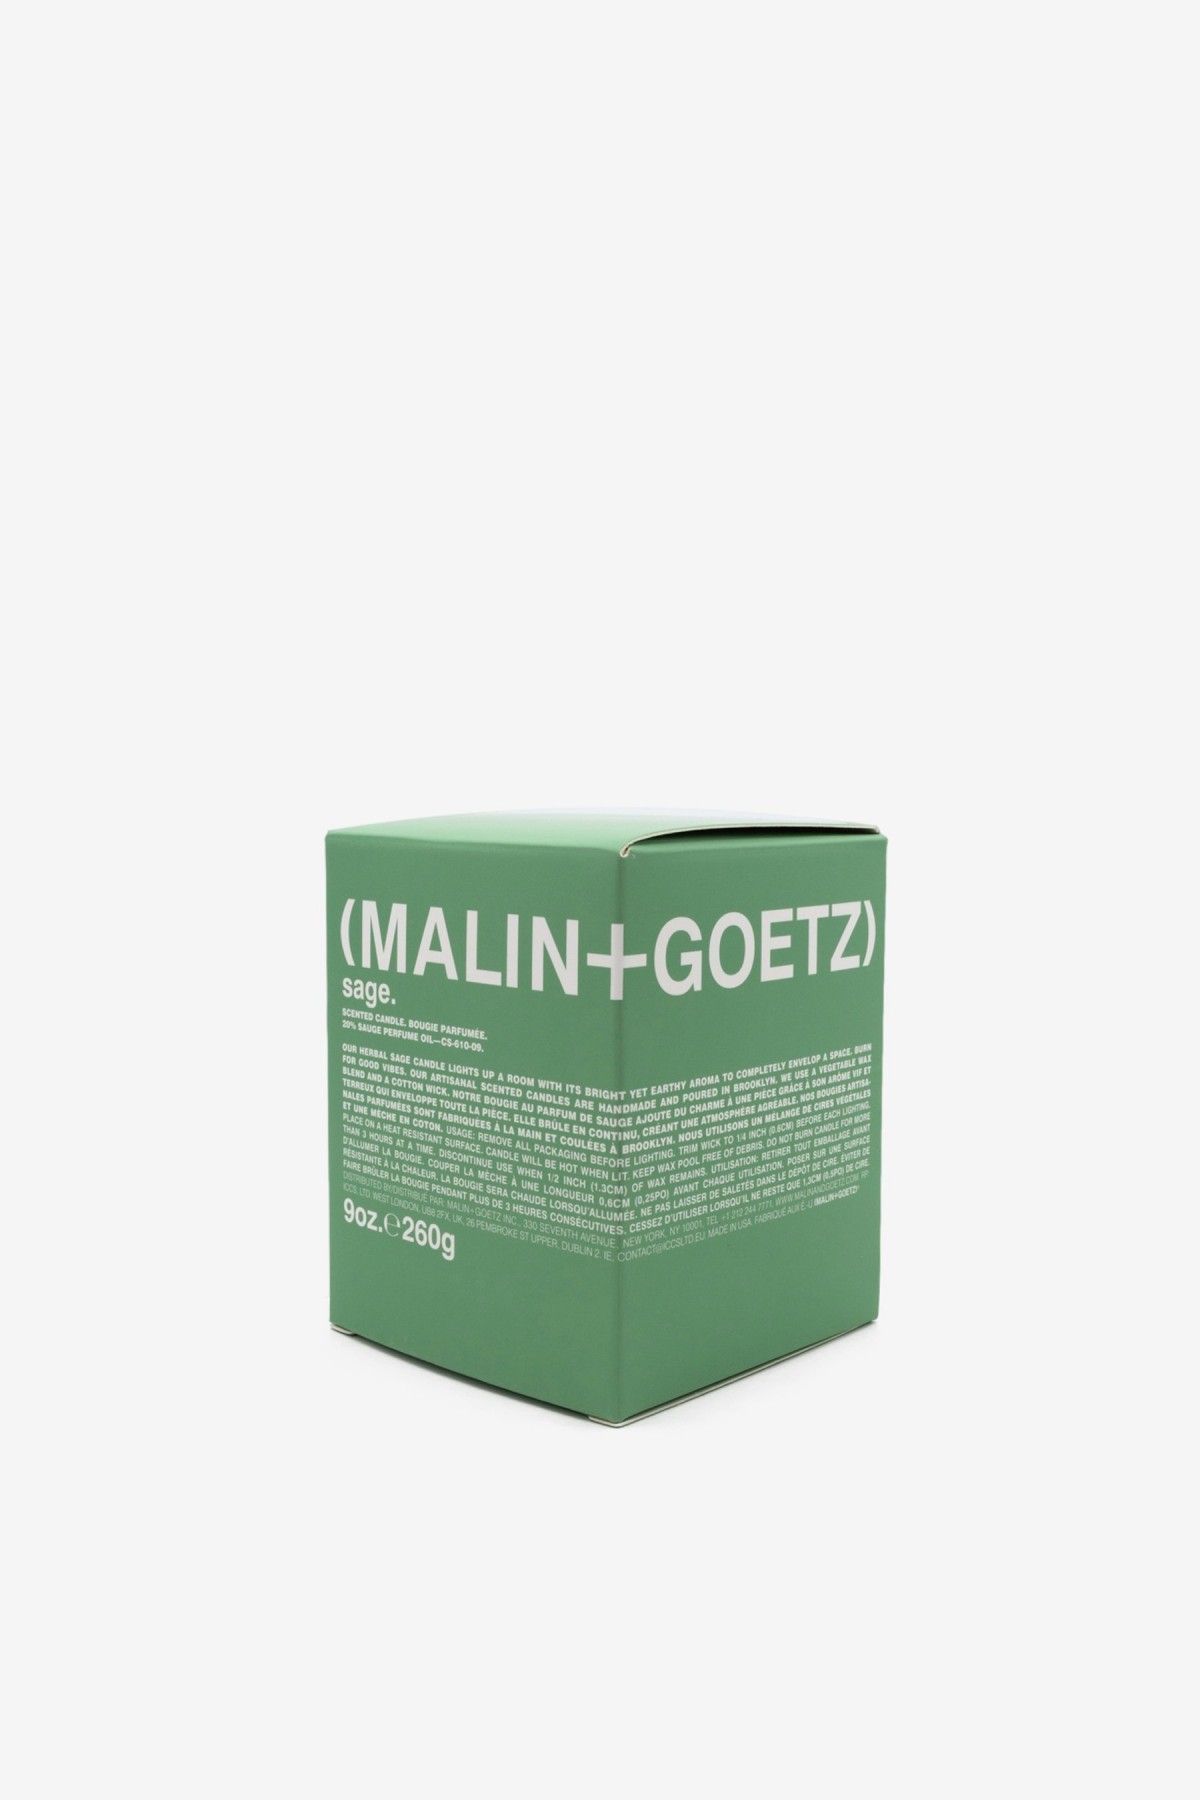 Malin+Goetz Sage Candle 260g in 